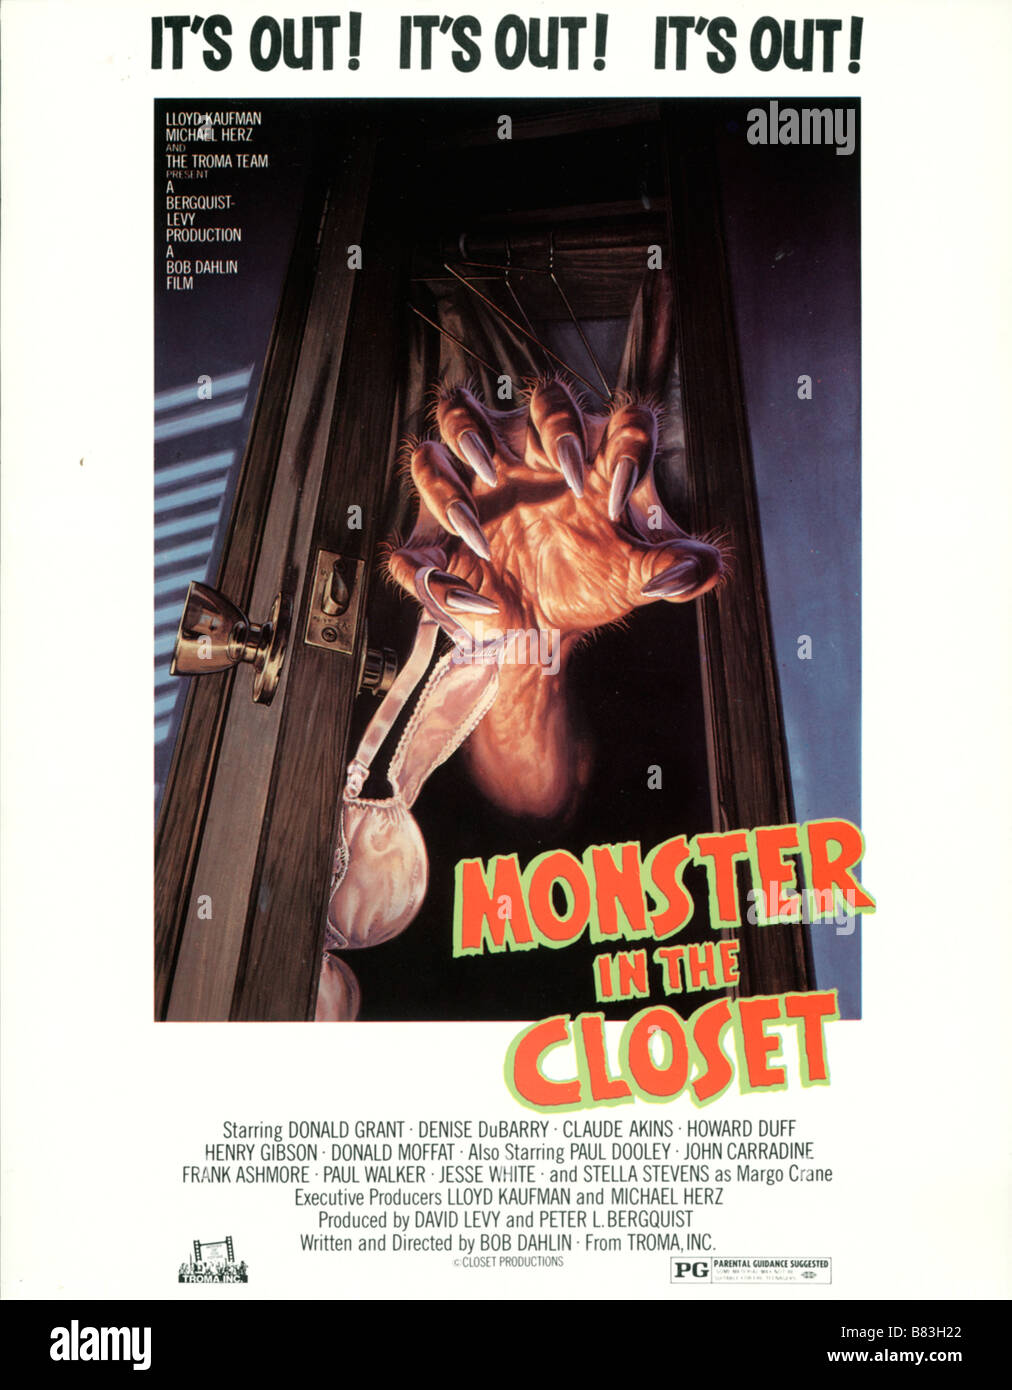 Monstruo en el armario monstruo en el armario (1987) Estados Unidos affiche, póster Director: Bob Dahlin Foto de stock